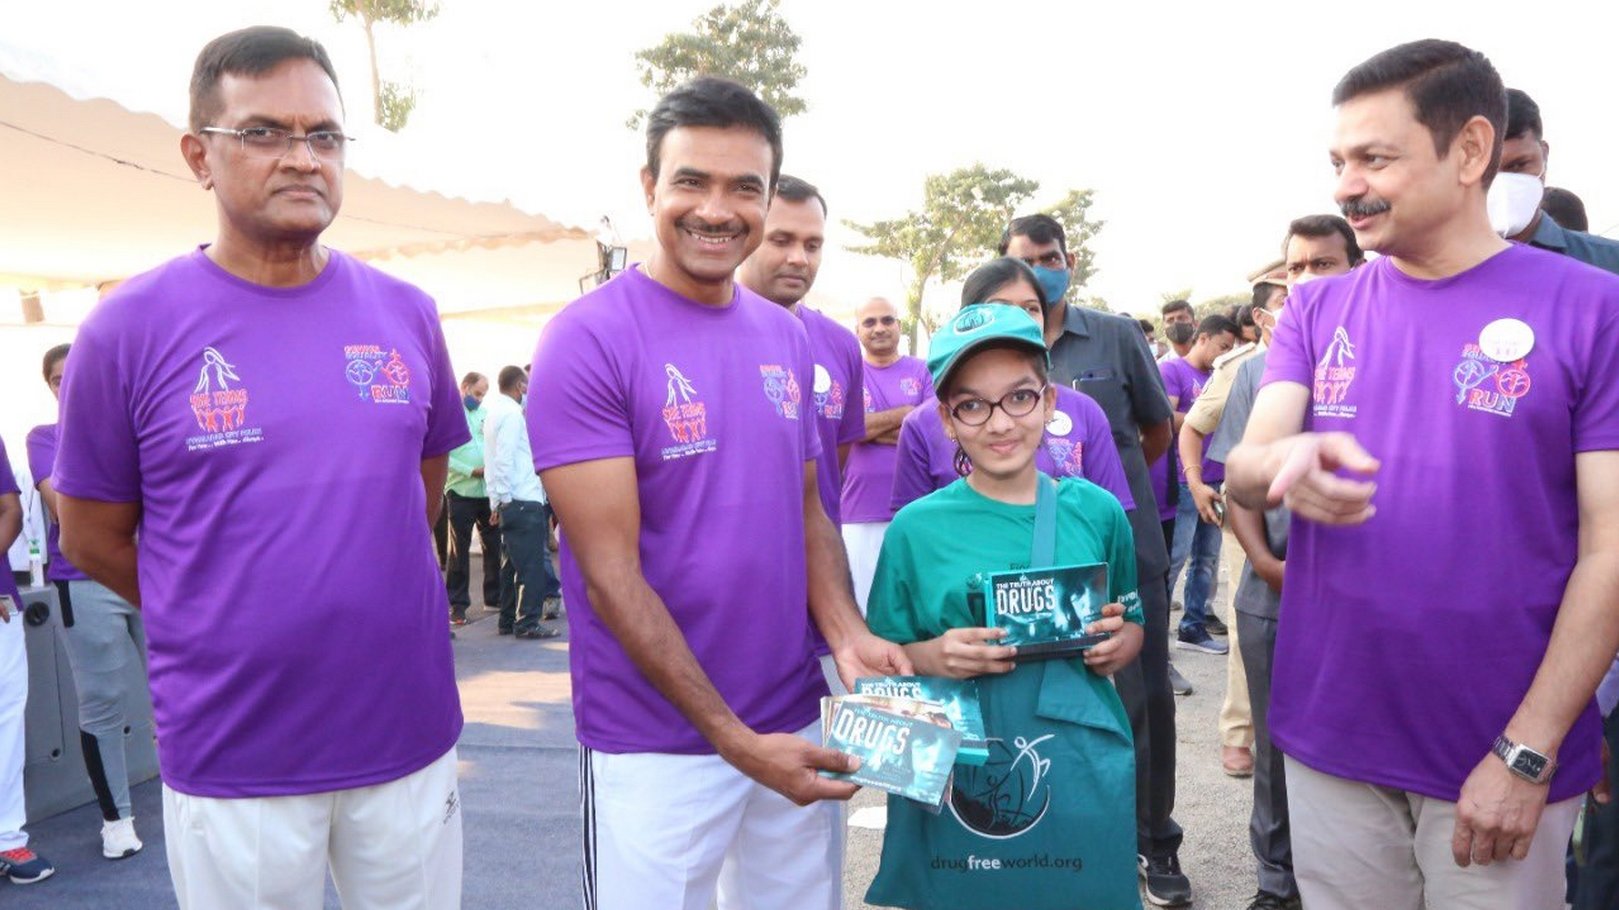 Foundation for a Drug-Free World’s Junior Ambassador Taniya Begum raises awareness about drugs at a community event.